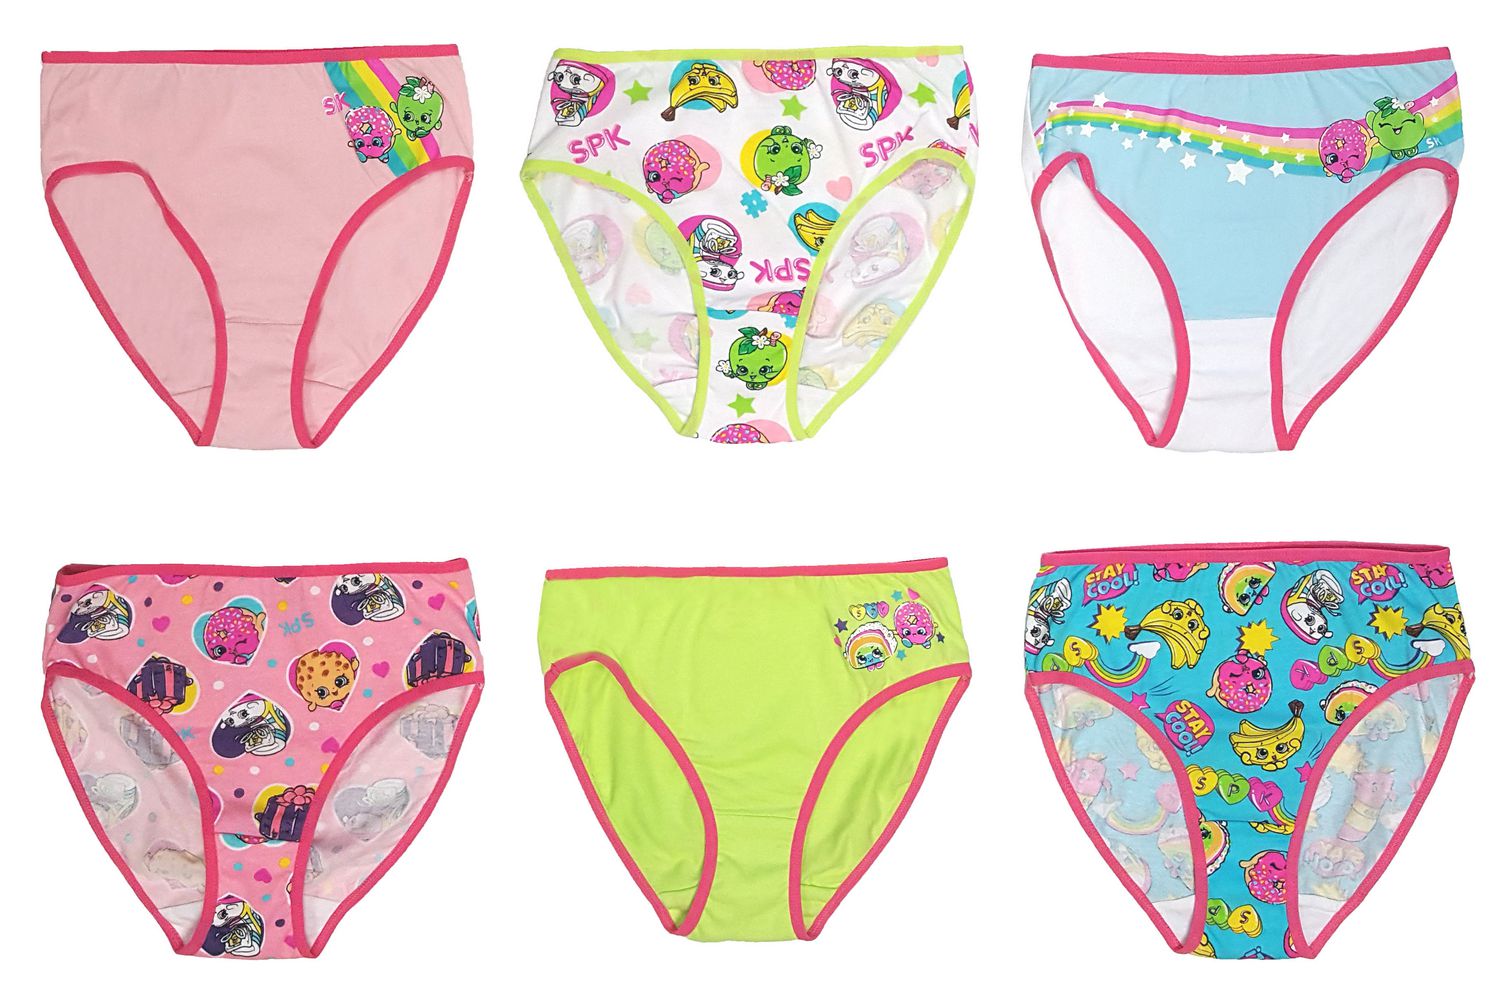  Girls' Underwear - Shopkins / Girls' Underwear / Girls'  Clothing: Clothing, Shoes & Jewelry